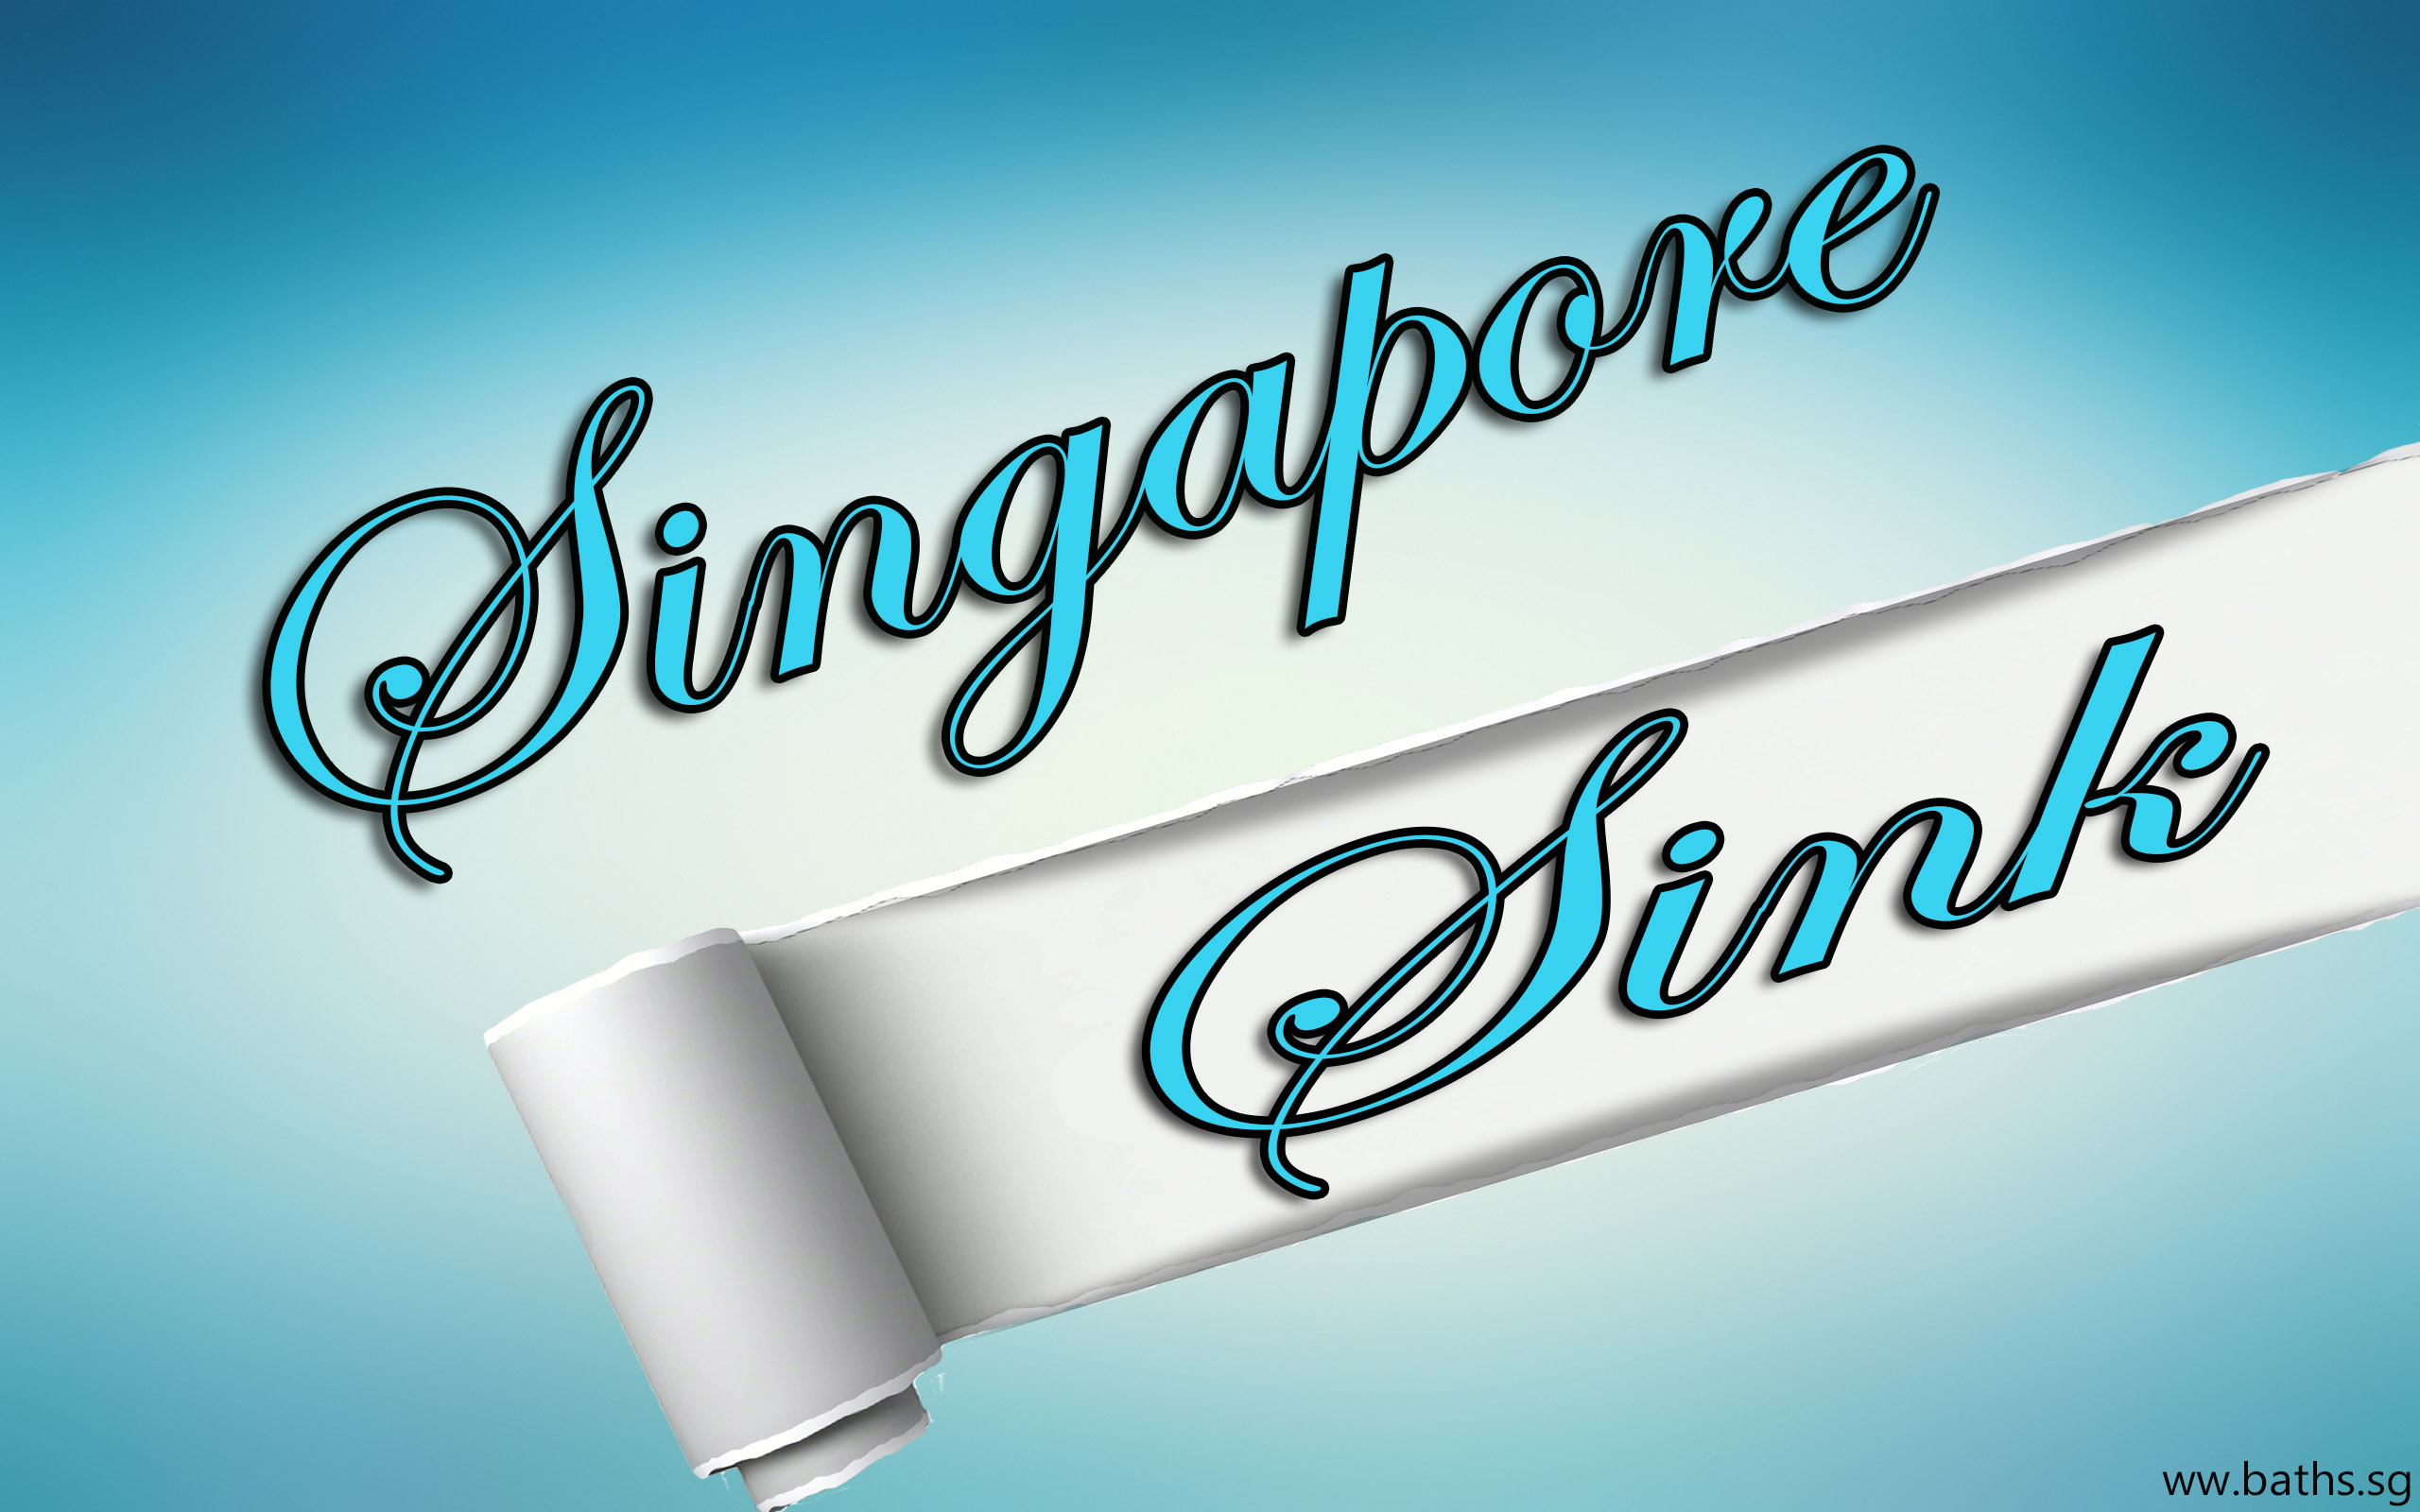 Bidet singapore